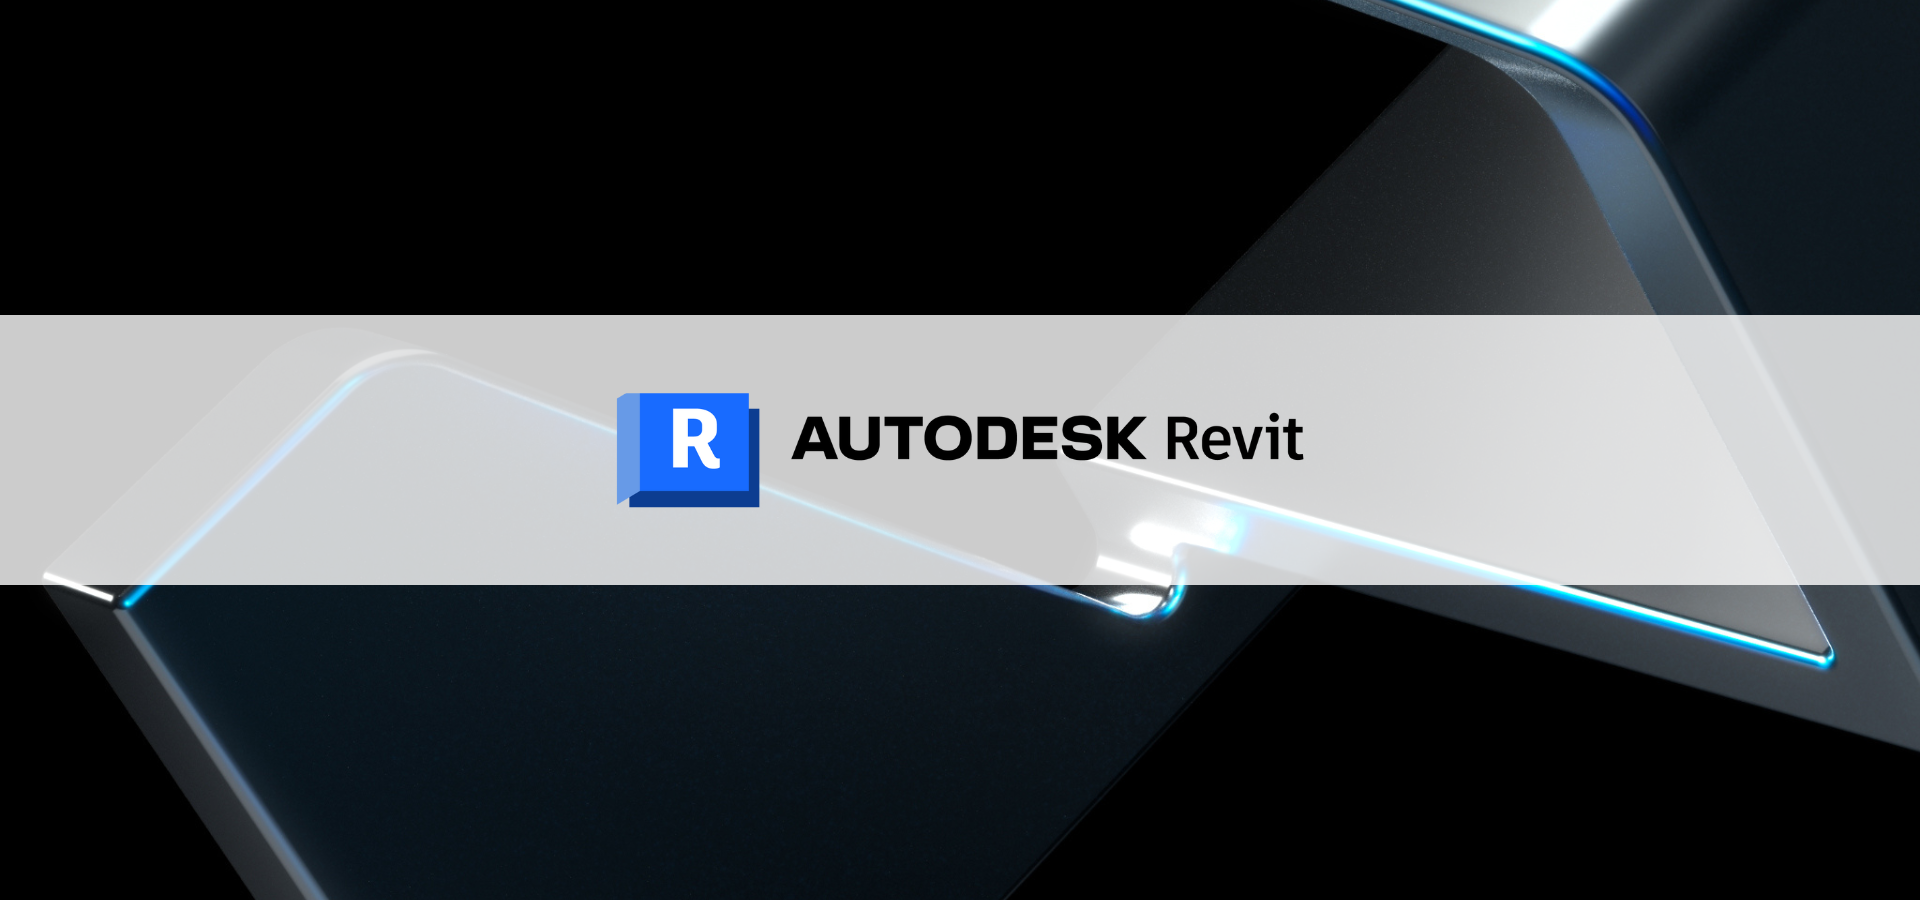 Autodesk Revit Architectural Training